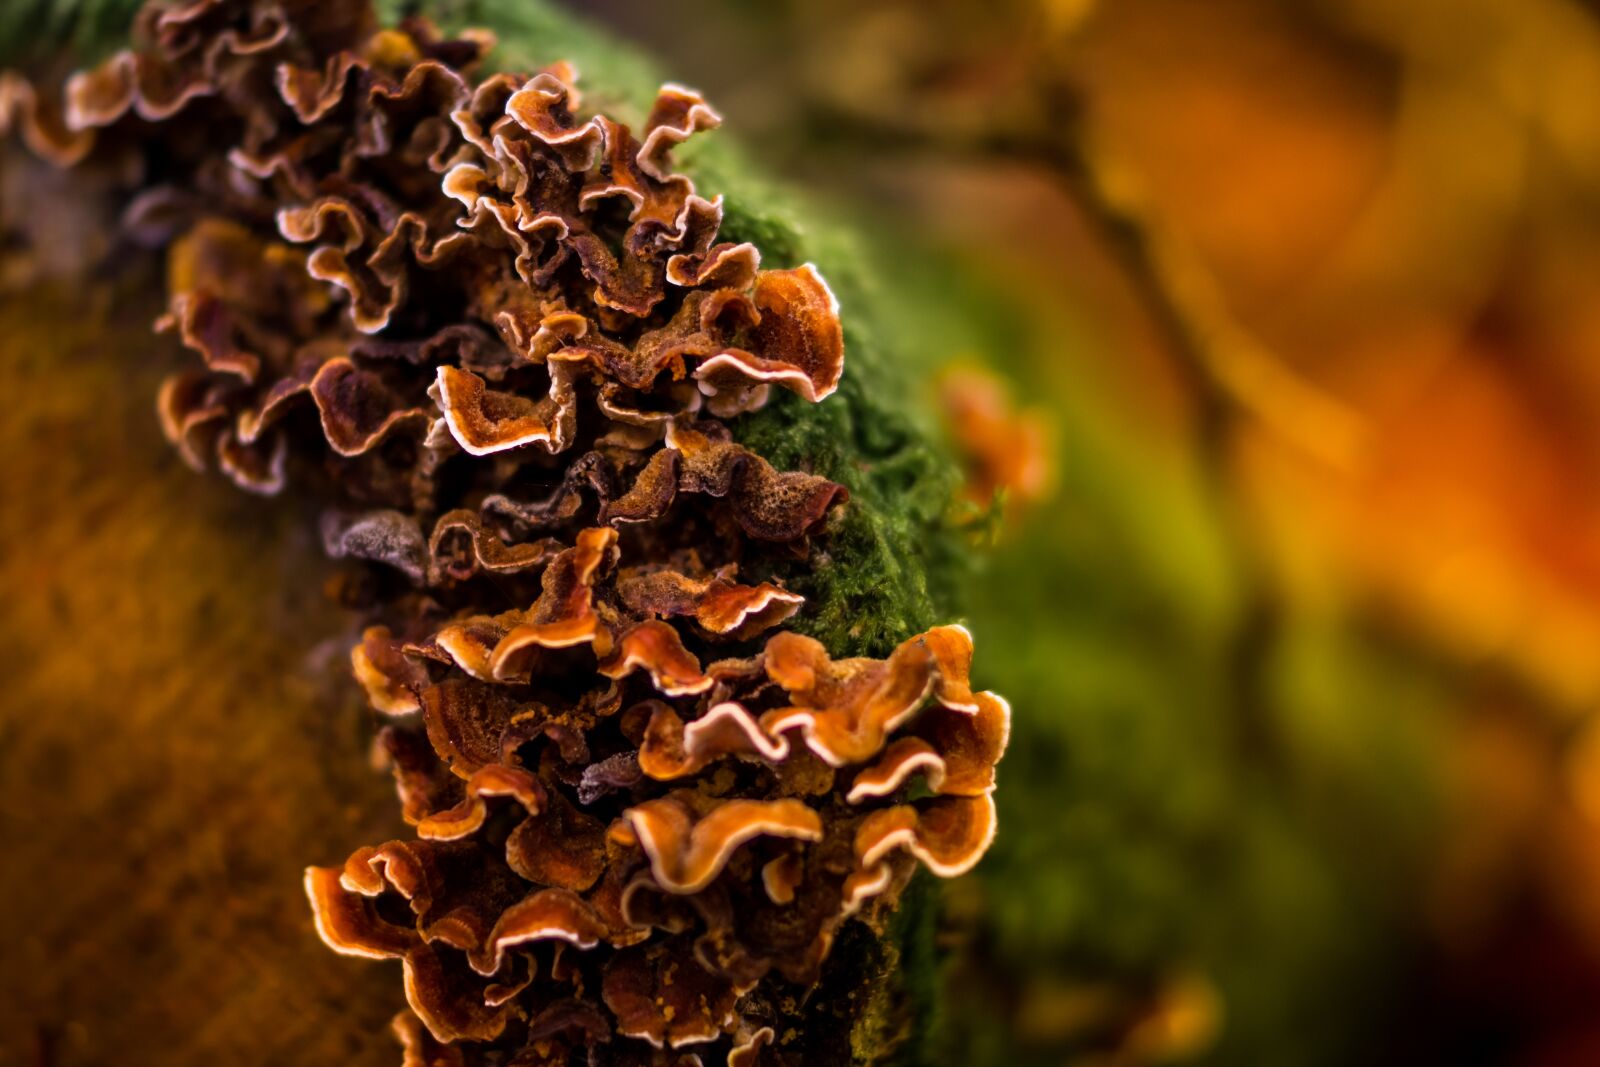 Sony SLT-A58 + Sony DT 35mm F1.8 SAM sample photo. Tree fungus, mushroom, nature photography